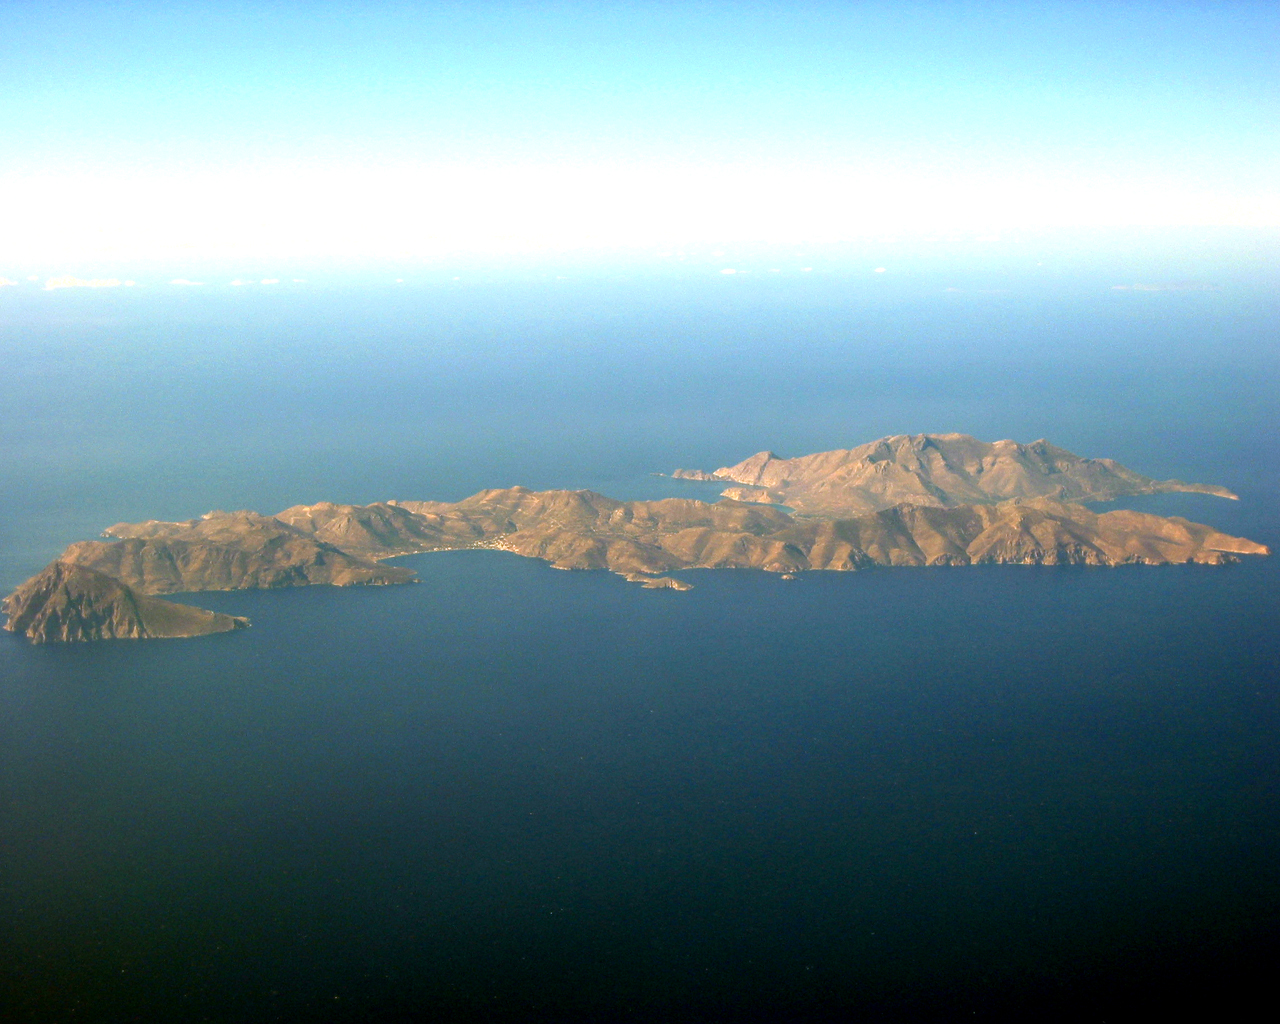 File:Tilos Greece aerial image.jpg - Wikimedia Commons